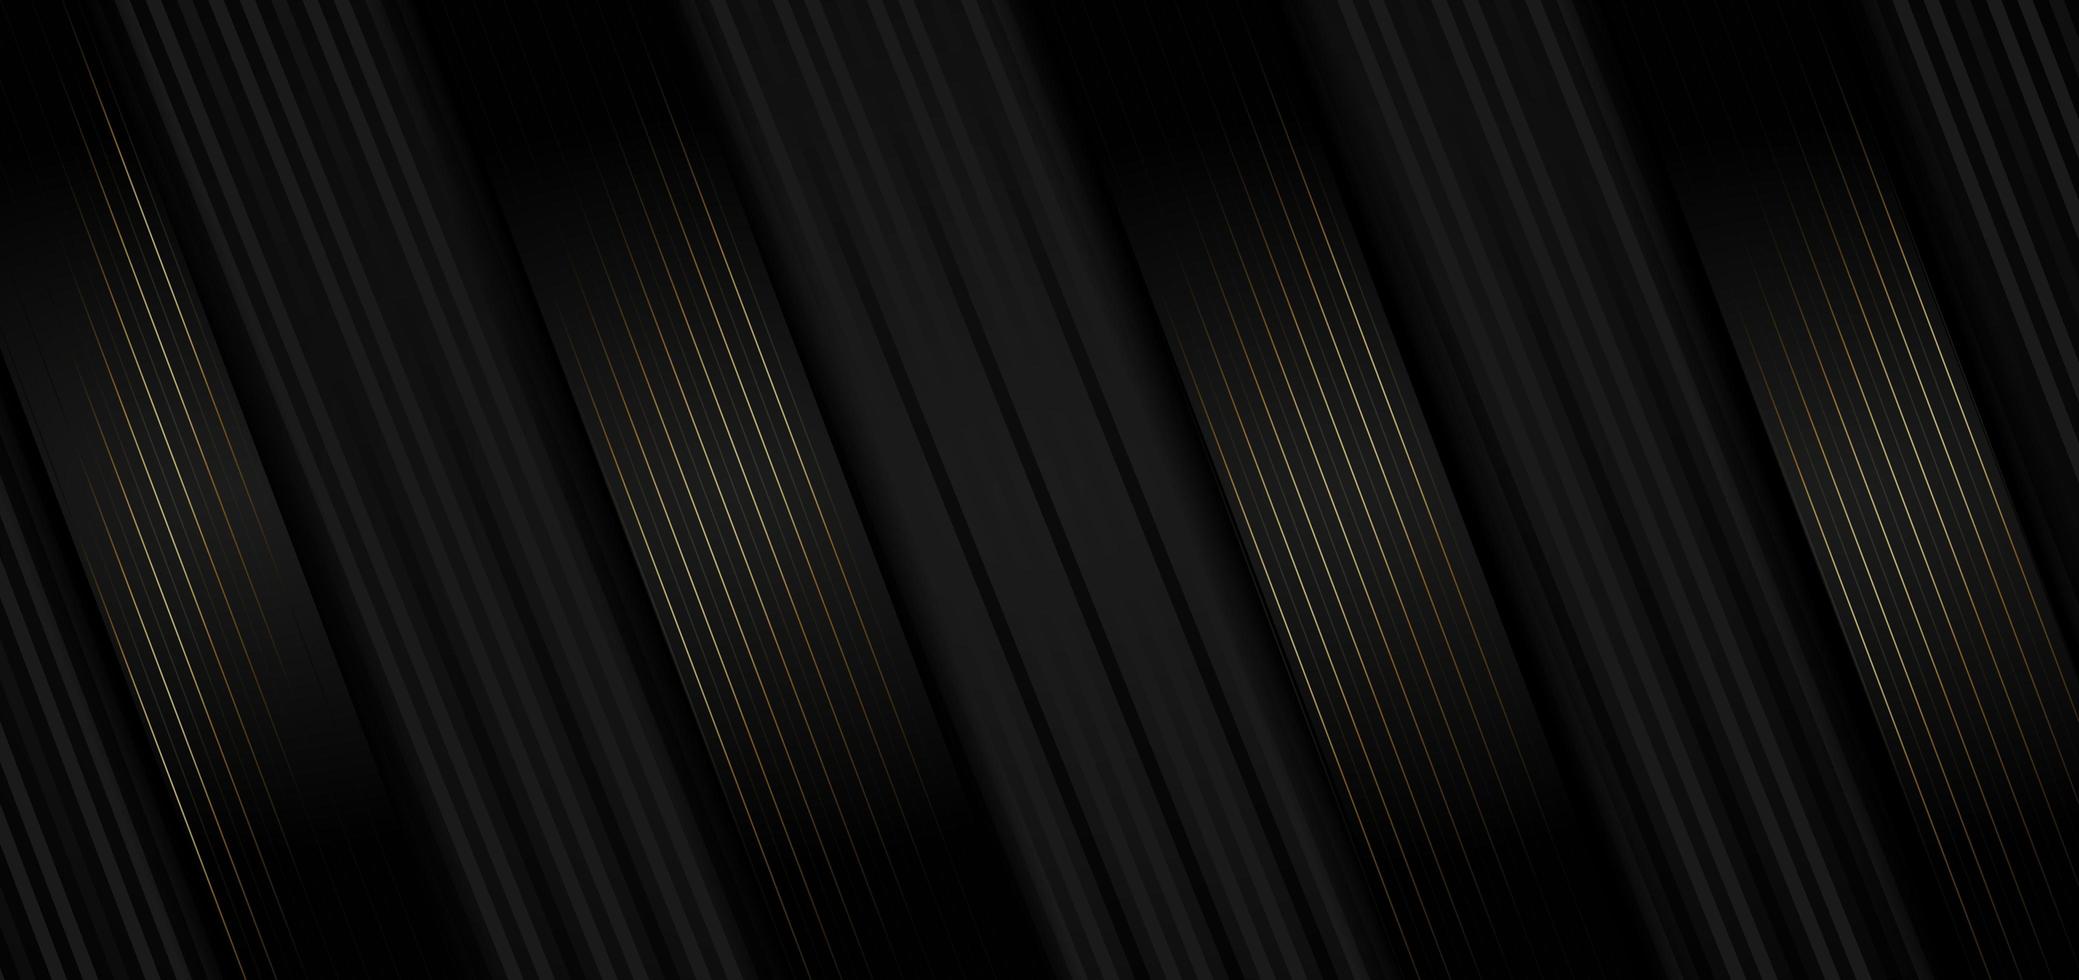 Fondo geométrico diagonal abstracto raya negra vector